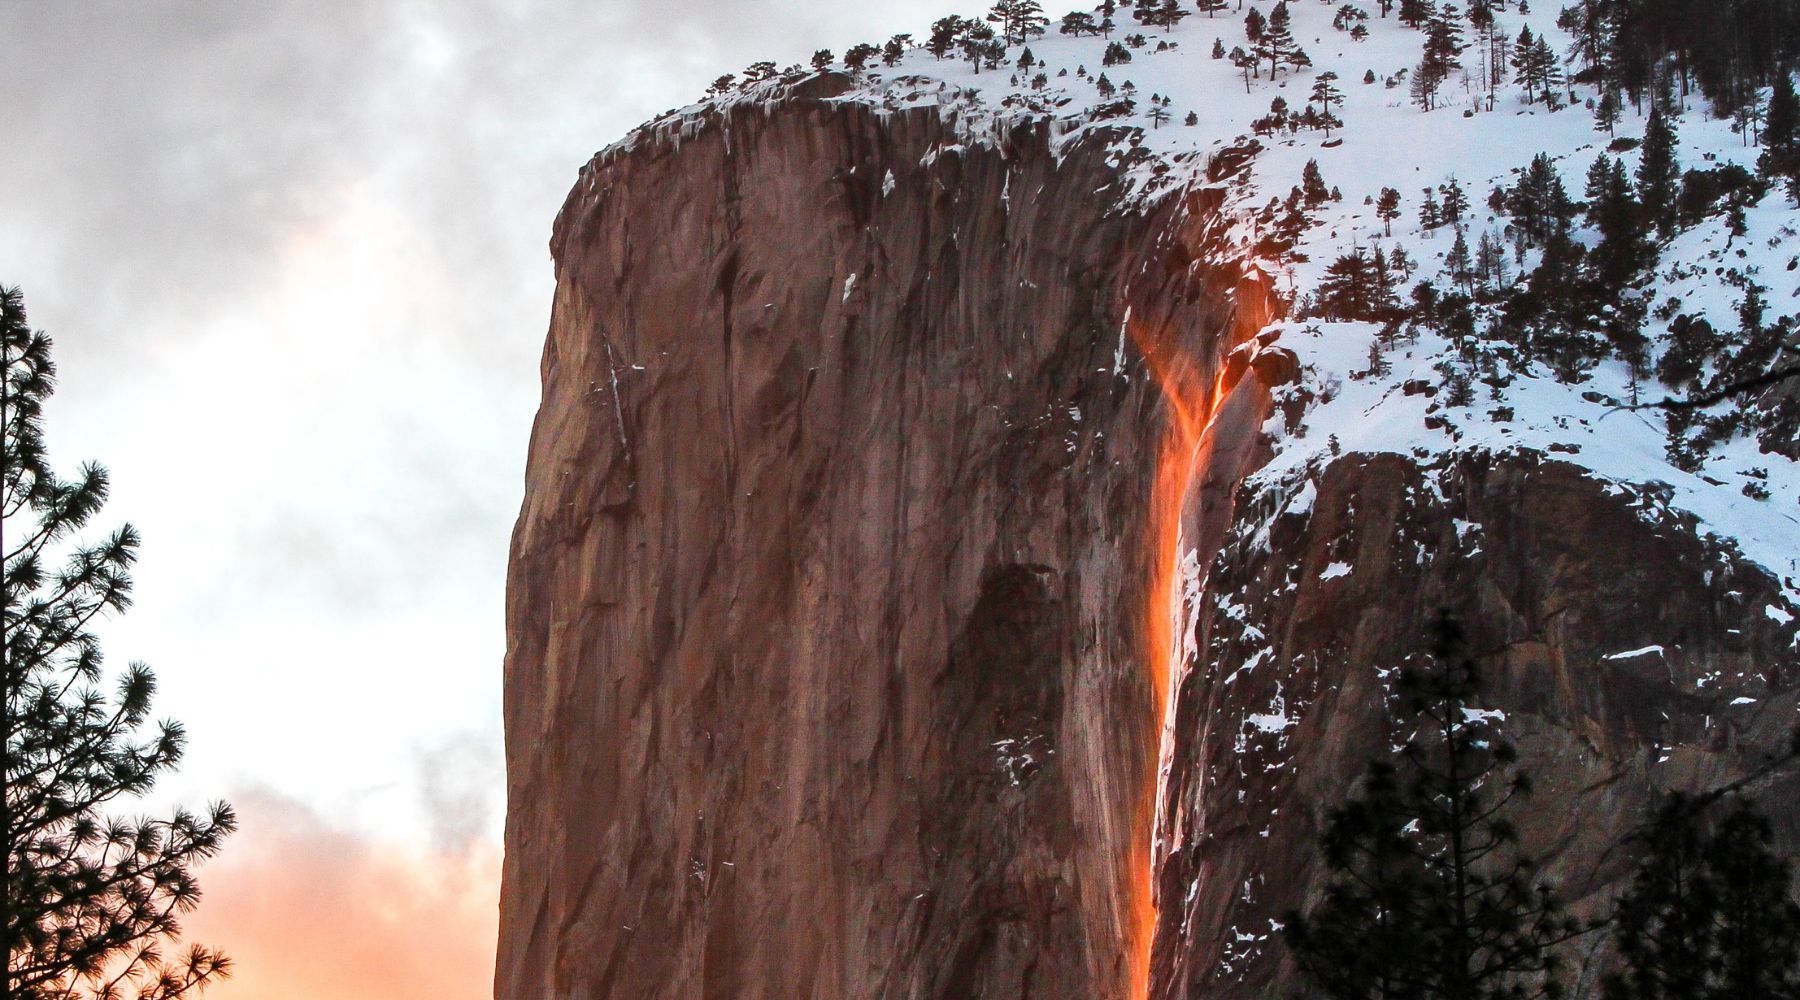 Yosemite Firefall: Horsetail Fall's Natural Firefall